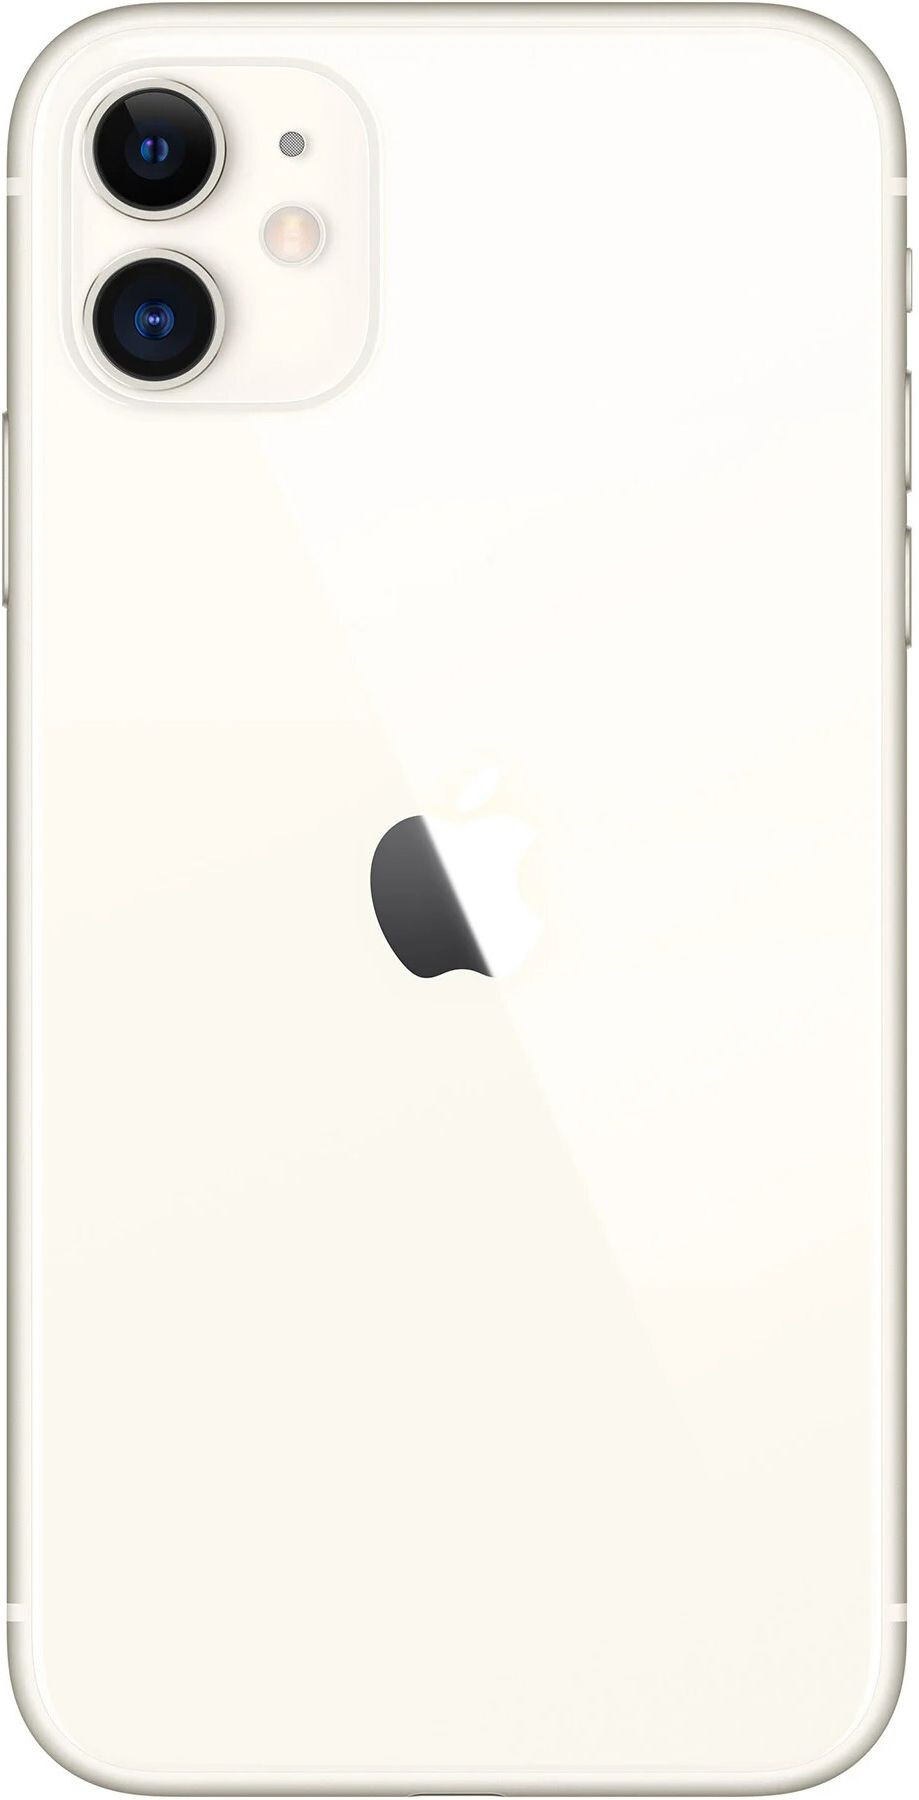  Apple iPhone 11 256GB White (MWLM2)